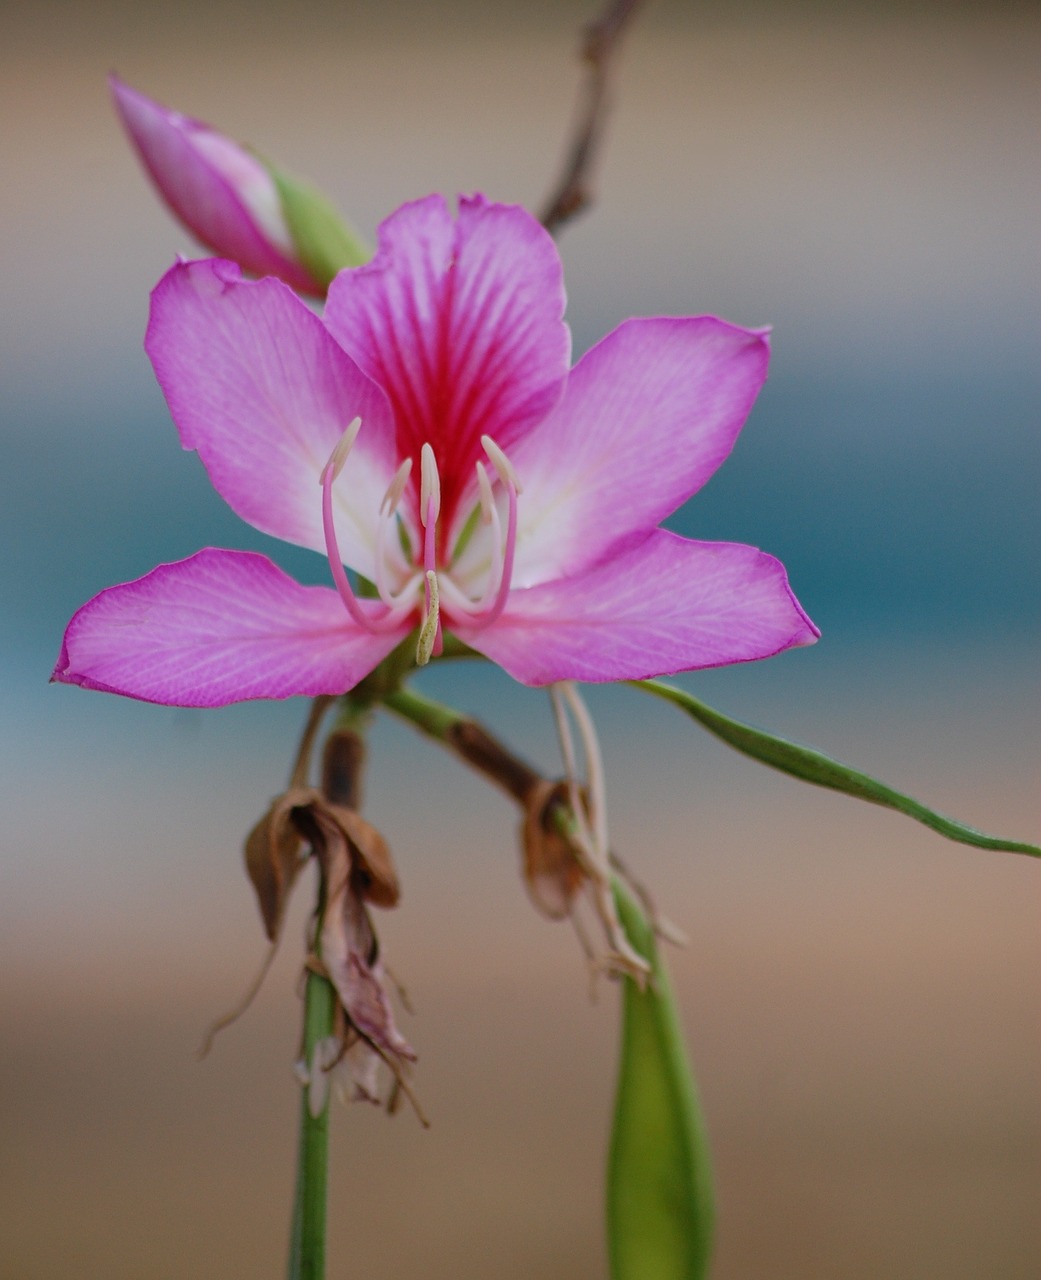 bauhinia flower pink free photo